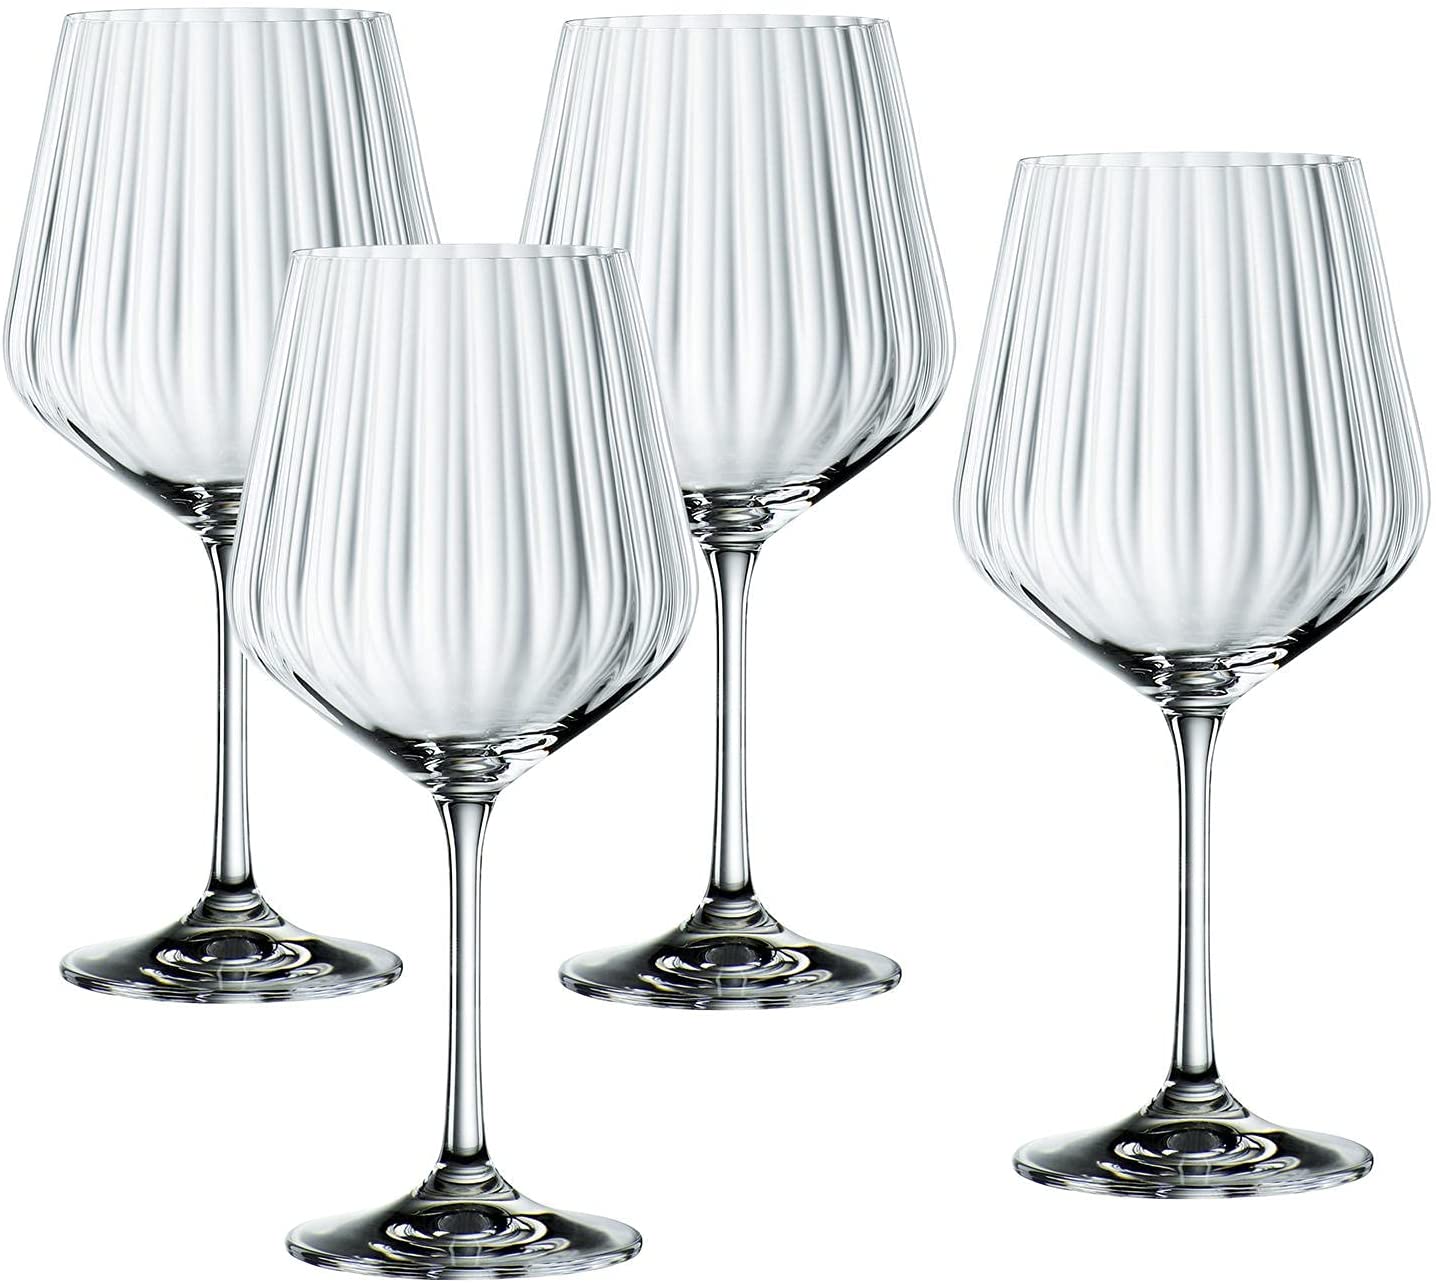 Spiegelau & Nachtmann, 9-Piece Gin & Tonic Set, 4 x Gin Tonic Glasses (637 ml), 4 x Glass Straws, 1 x Cleaning Brush, Tastes Good, 103143